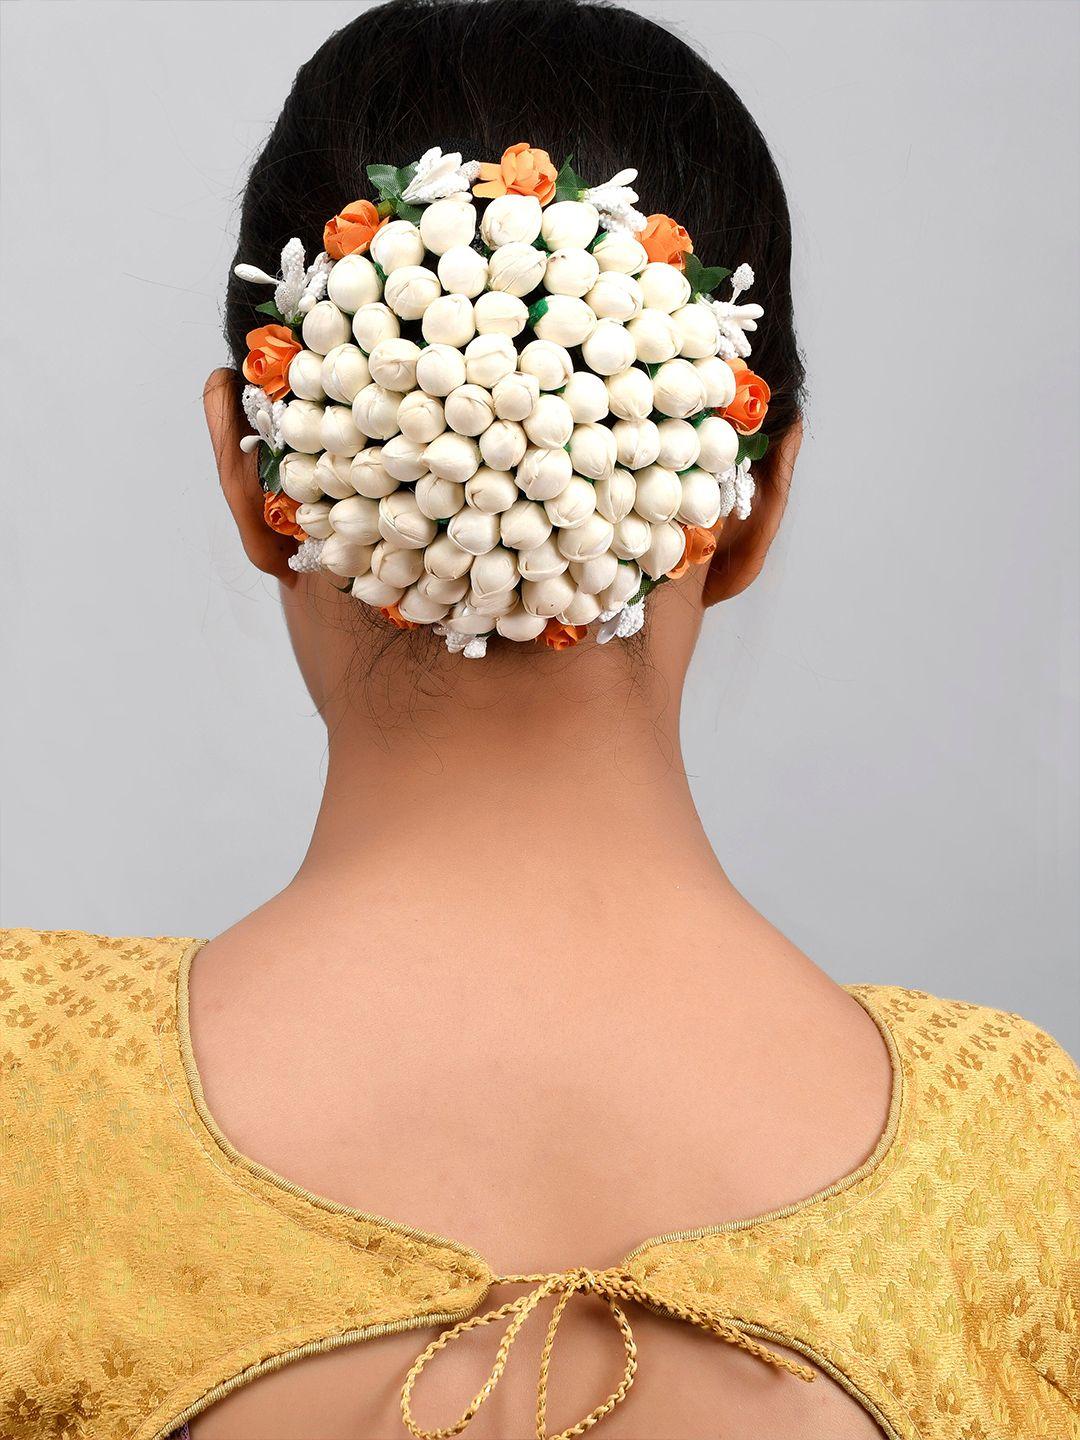 silvermerc designs women white & orange embellished hair bun cover hair accessory set